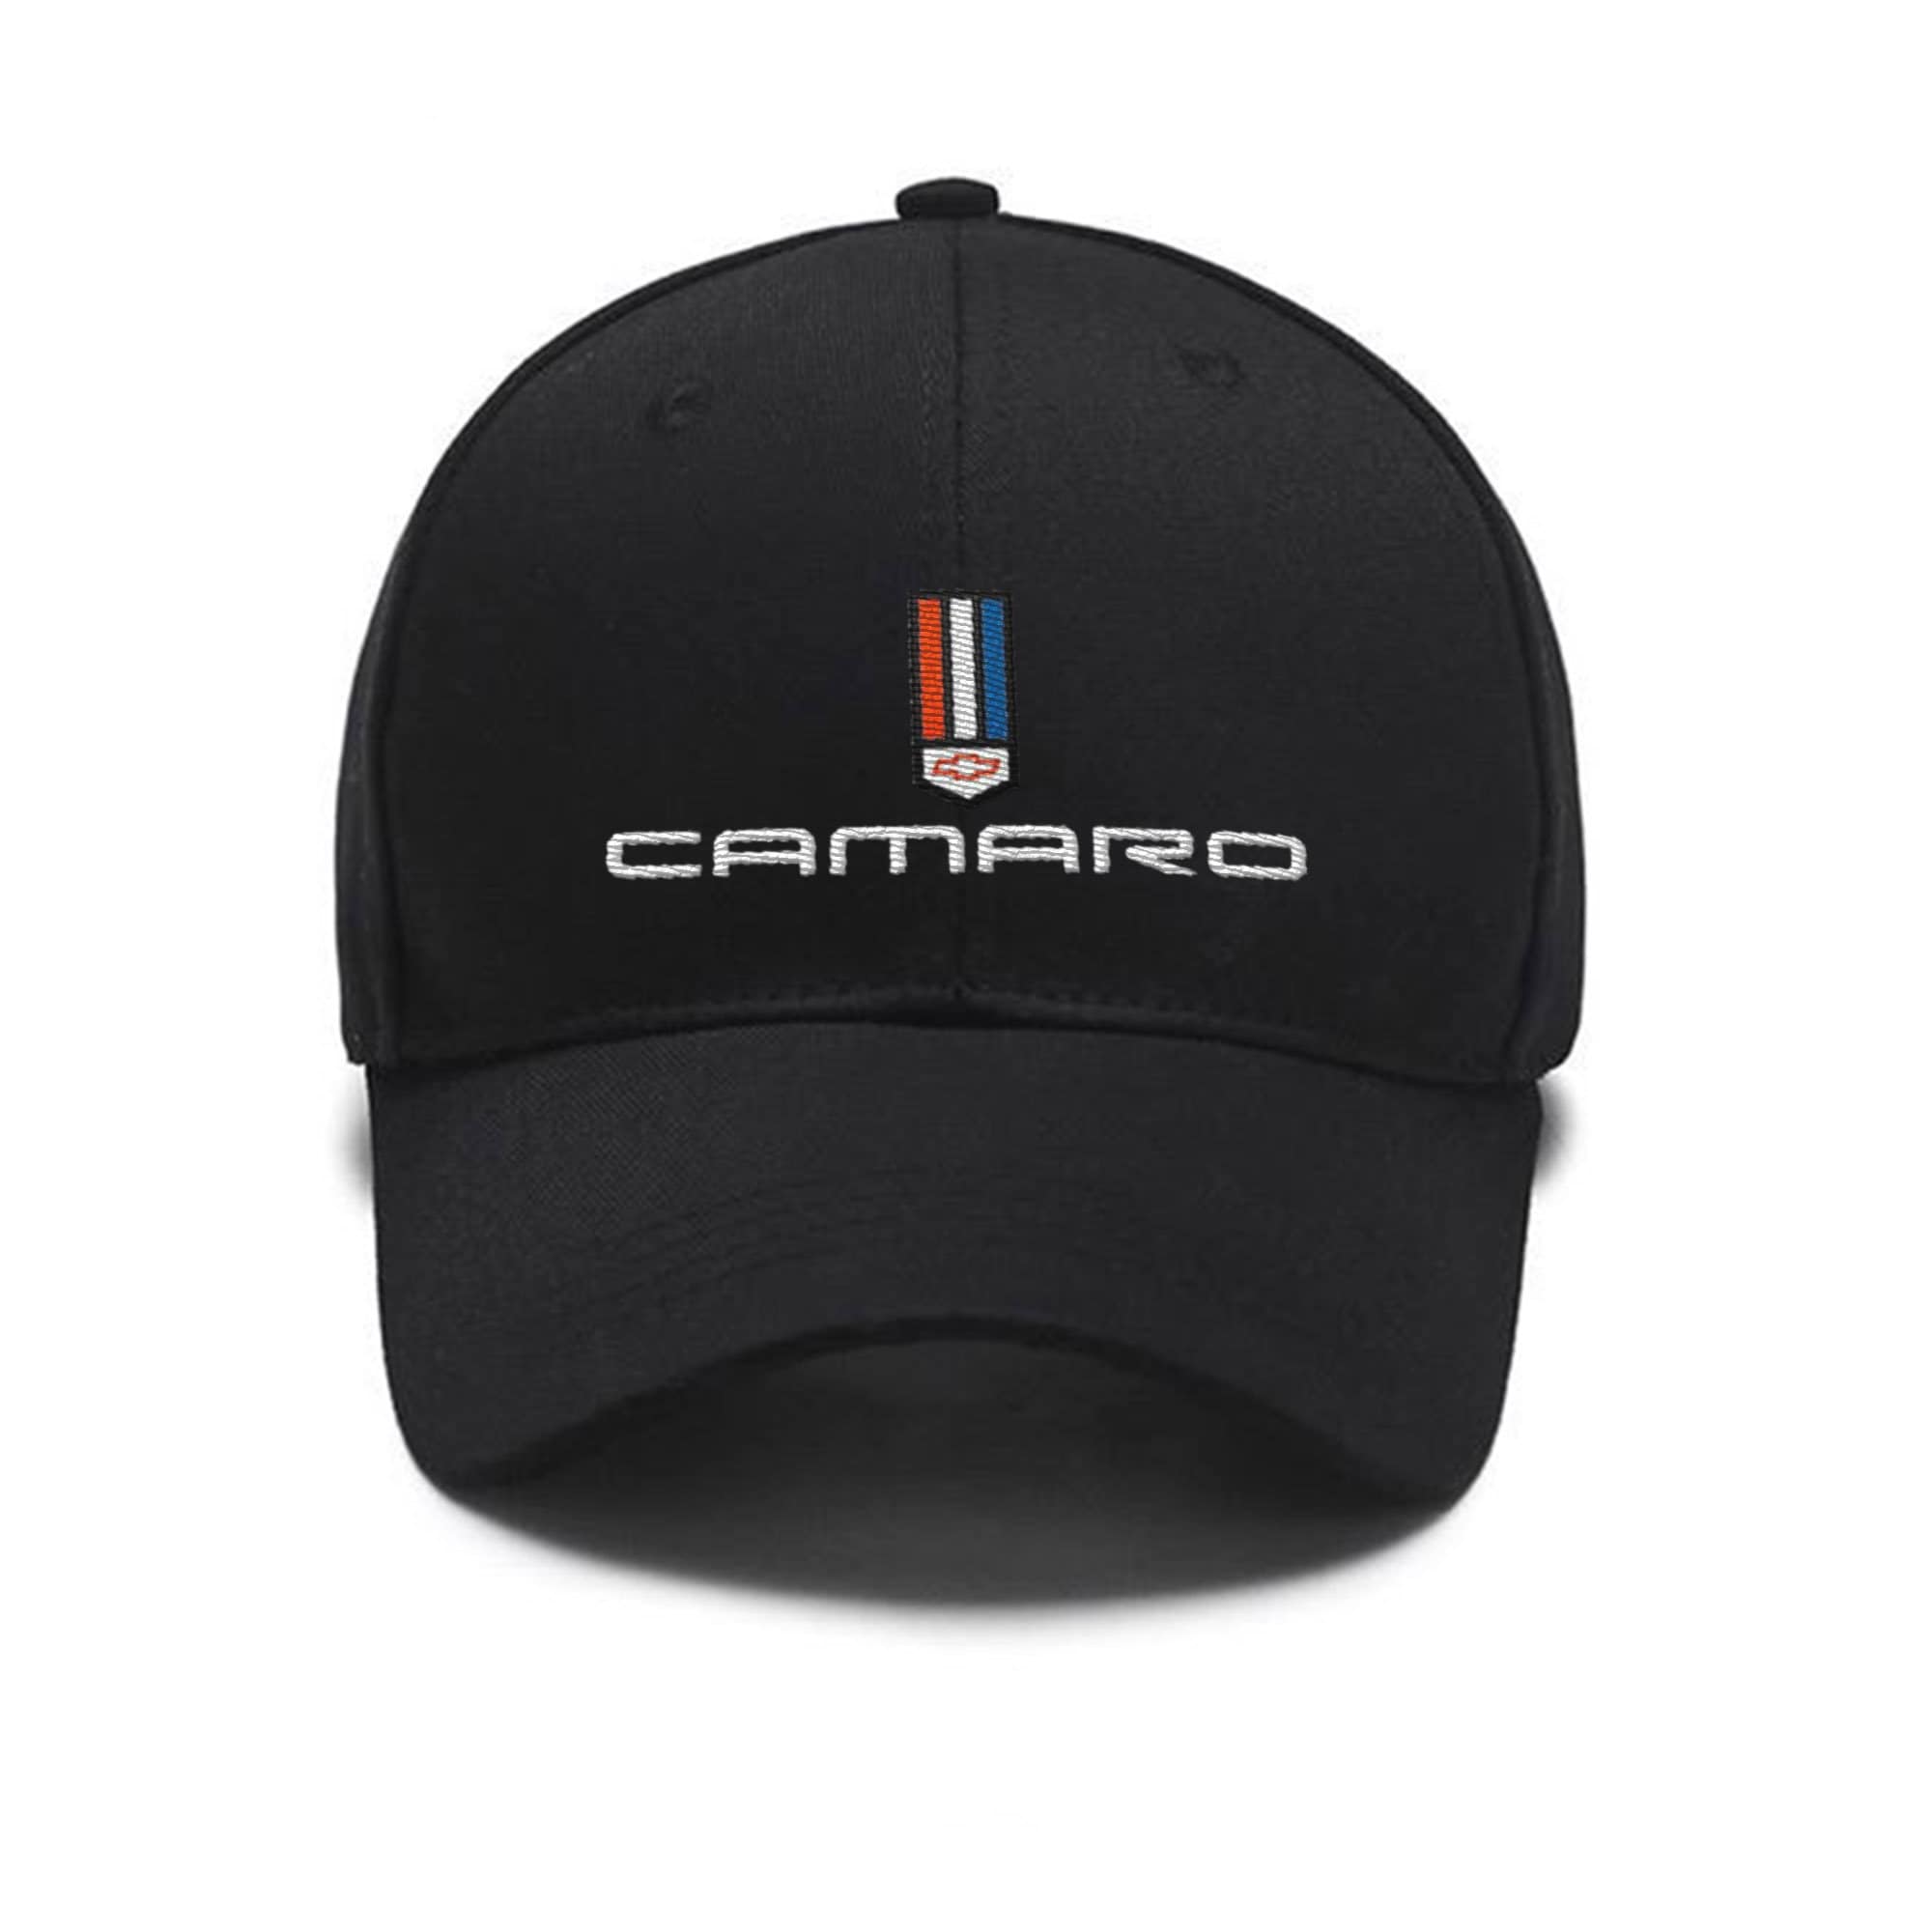 Camaro Embroidered hats, Camaro hat